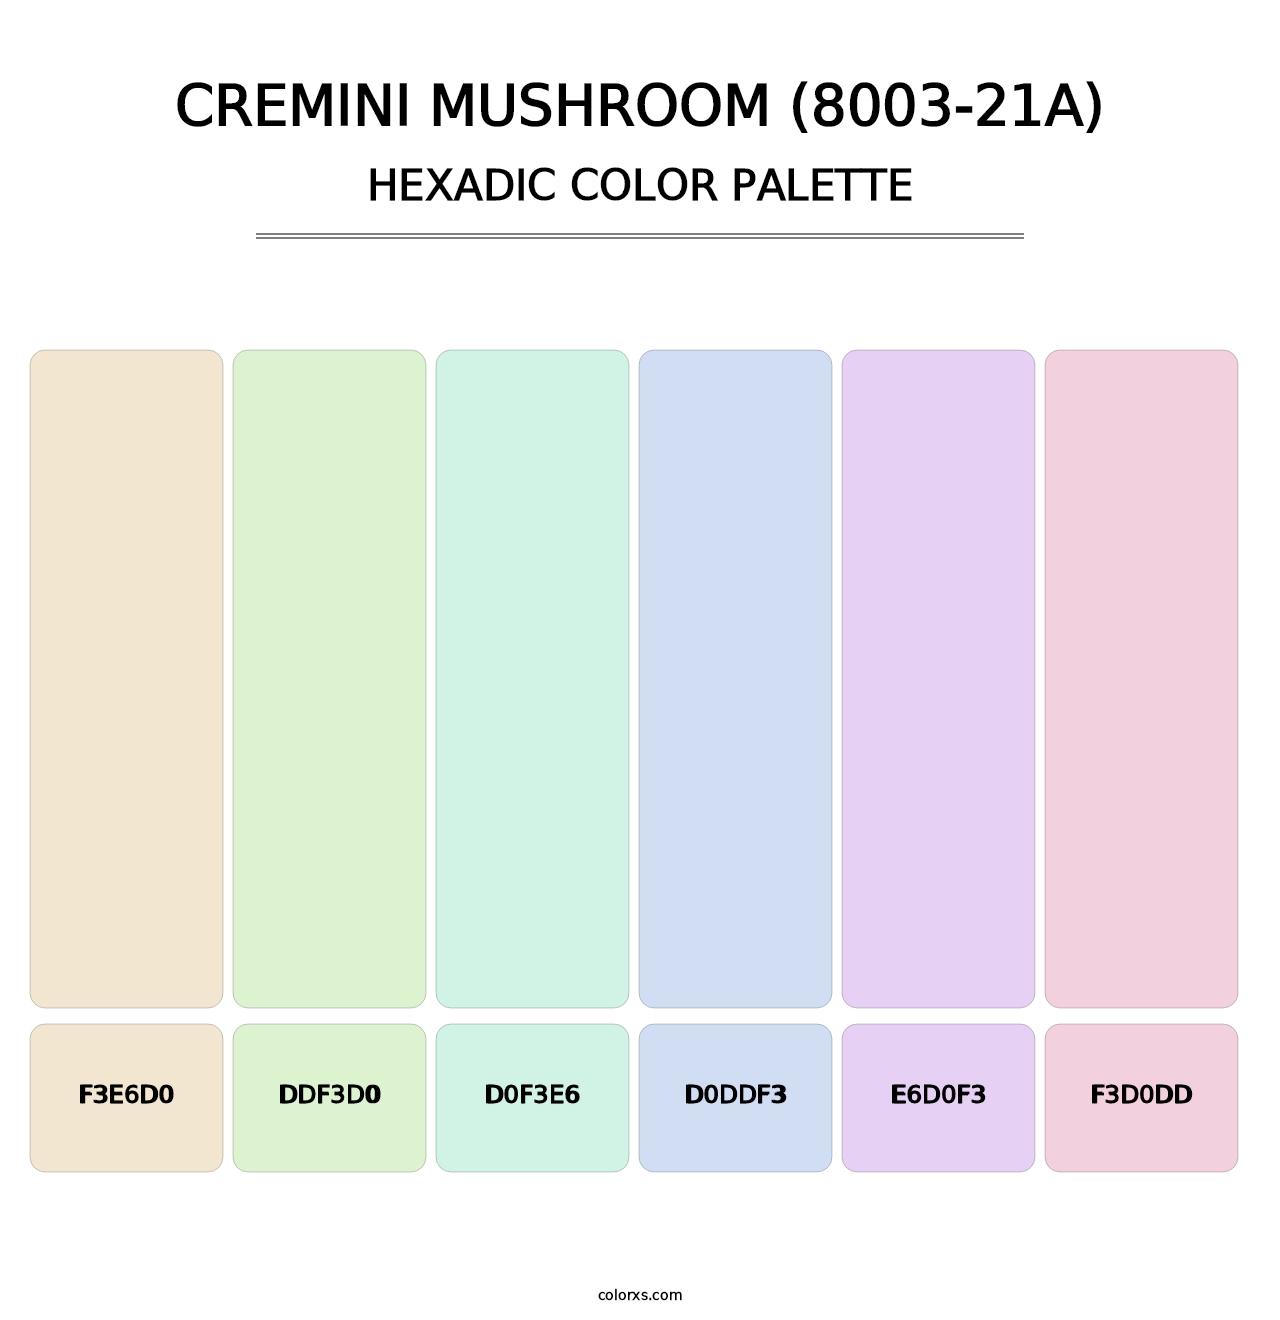 Cremini Mushroom (8003-21A) - Hexadic Color Palette